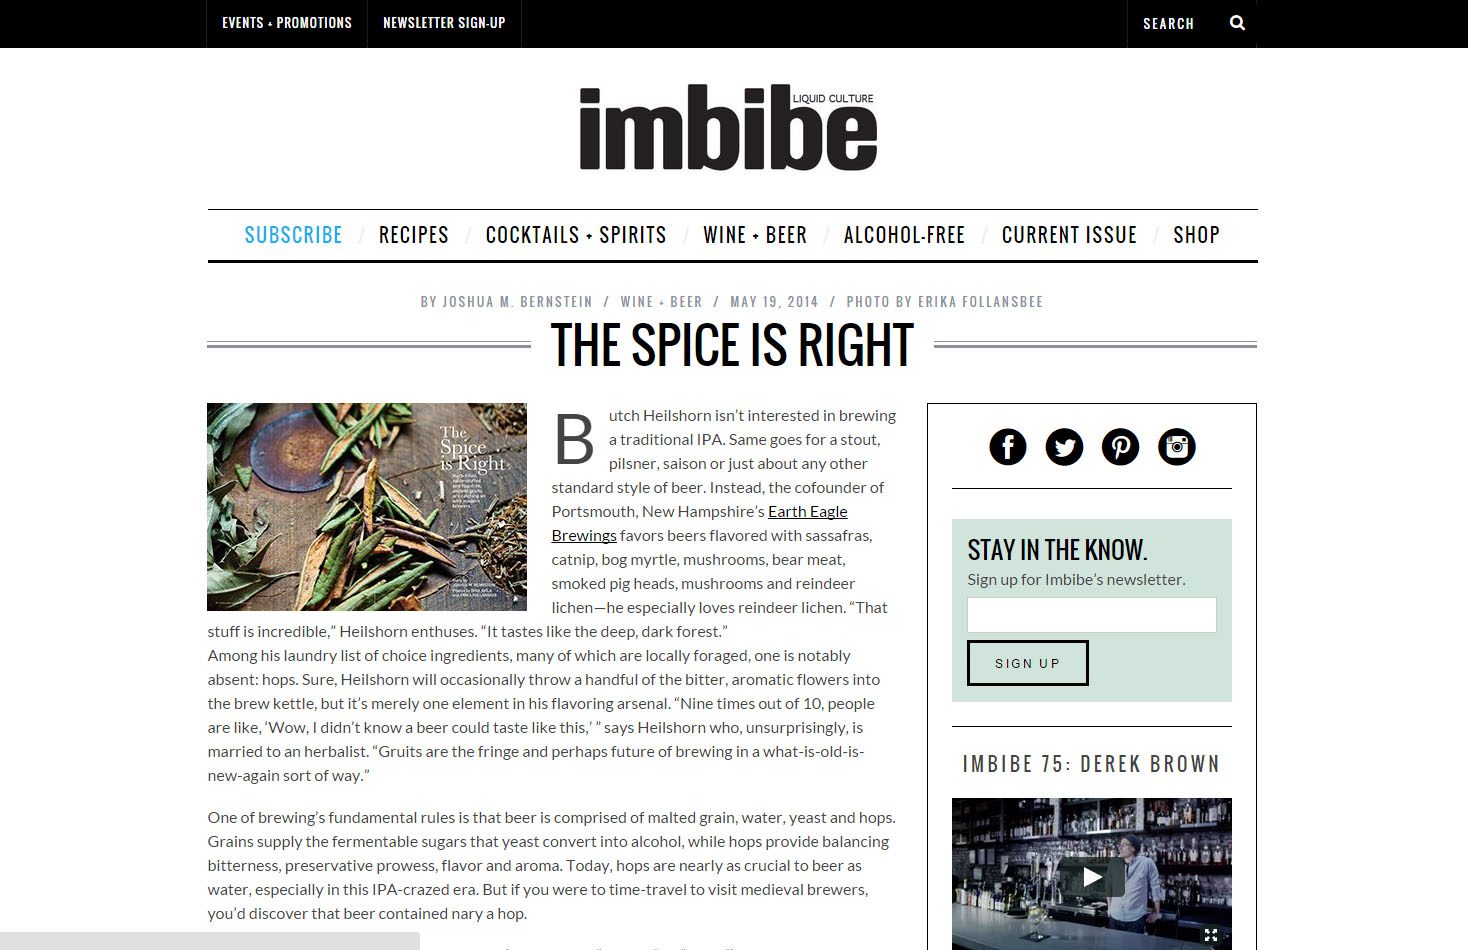 imbibe magazine may/june 2014 